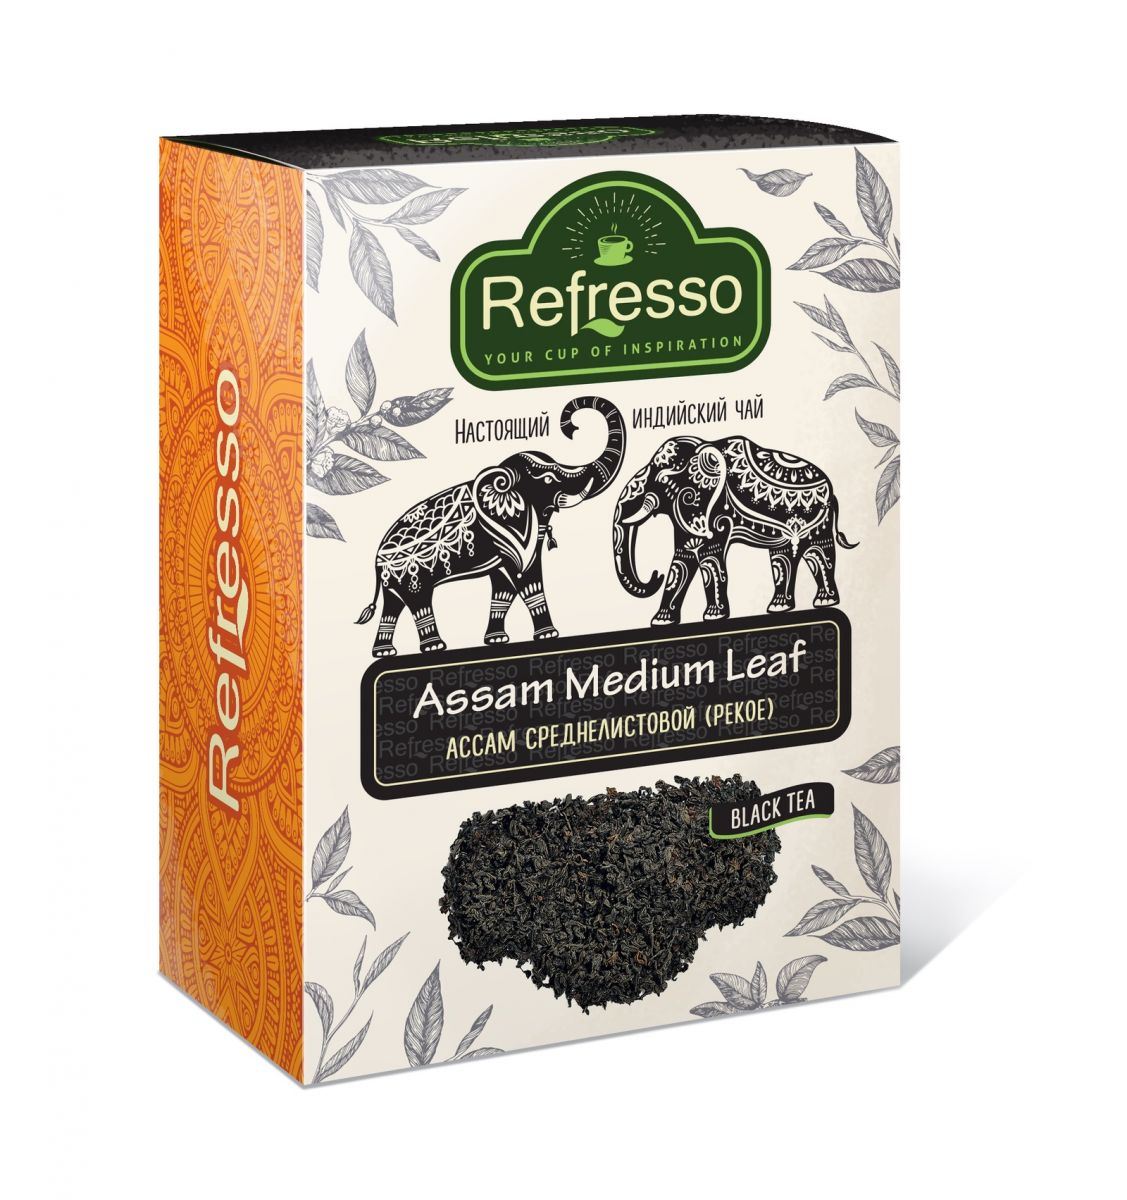 Classic EARL GREY Black Tea, Refresso (Черный чай с бергамотом, Рефрессо), 100 г.